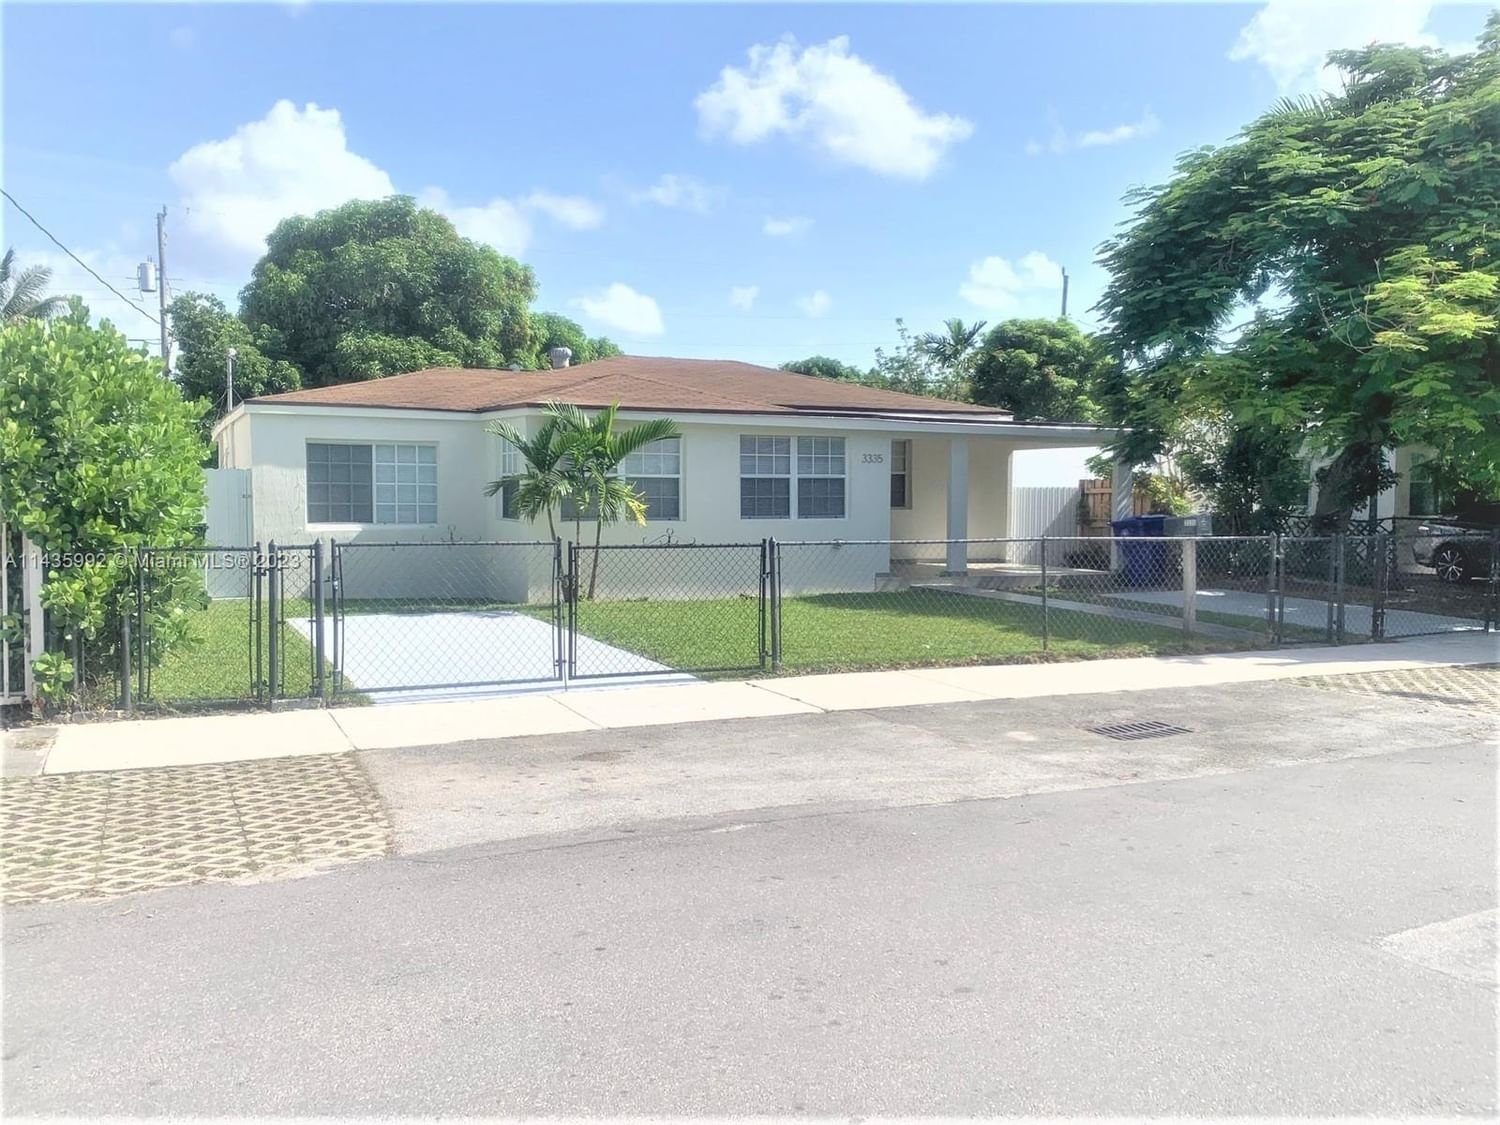 Real estate property located at 3335 19th St, Miami-Dade County, Miami, FL